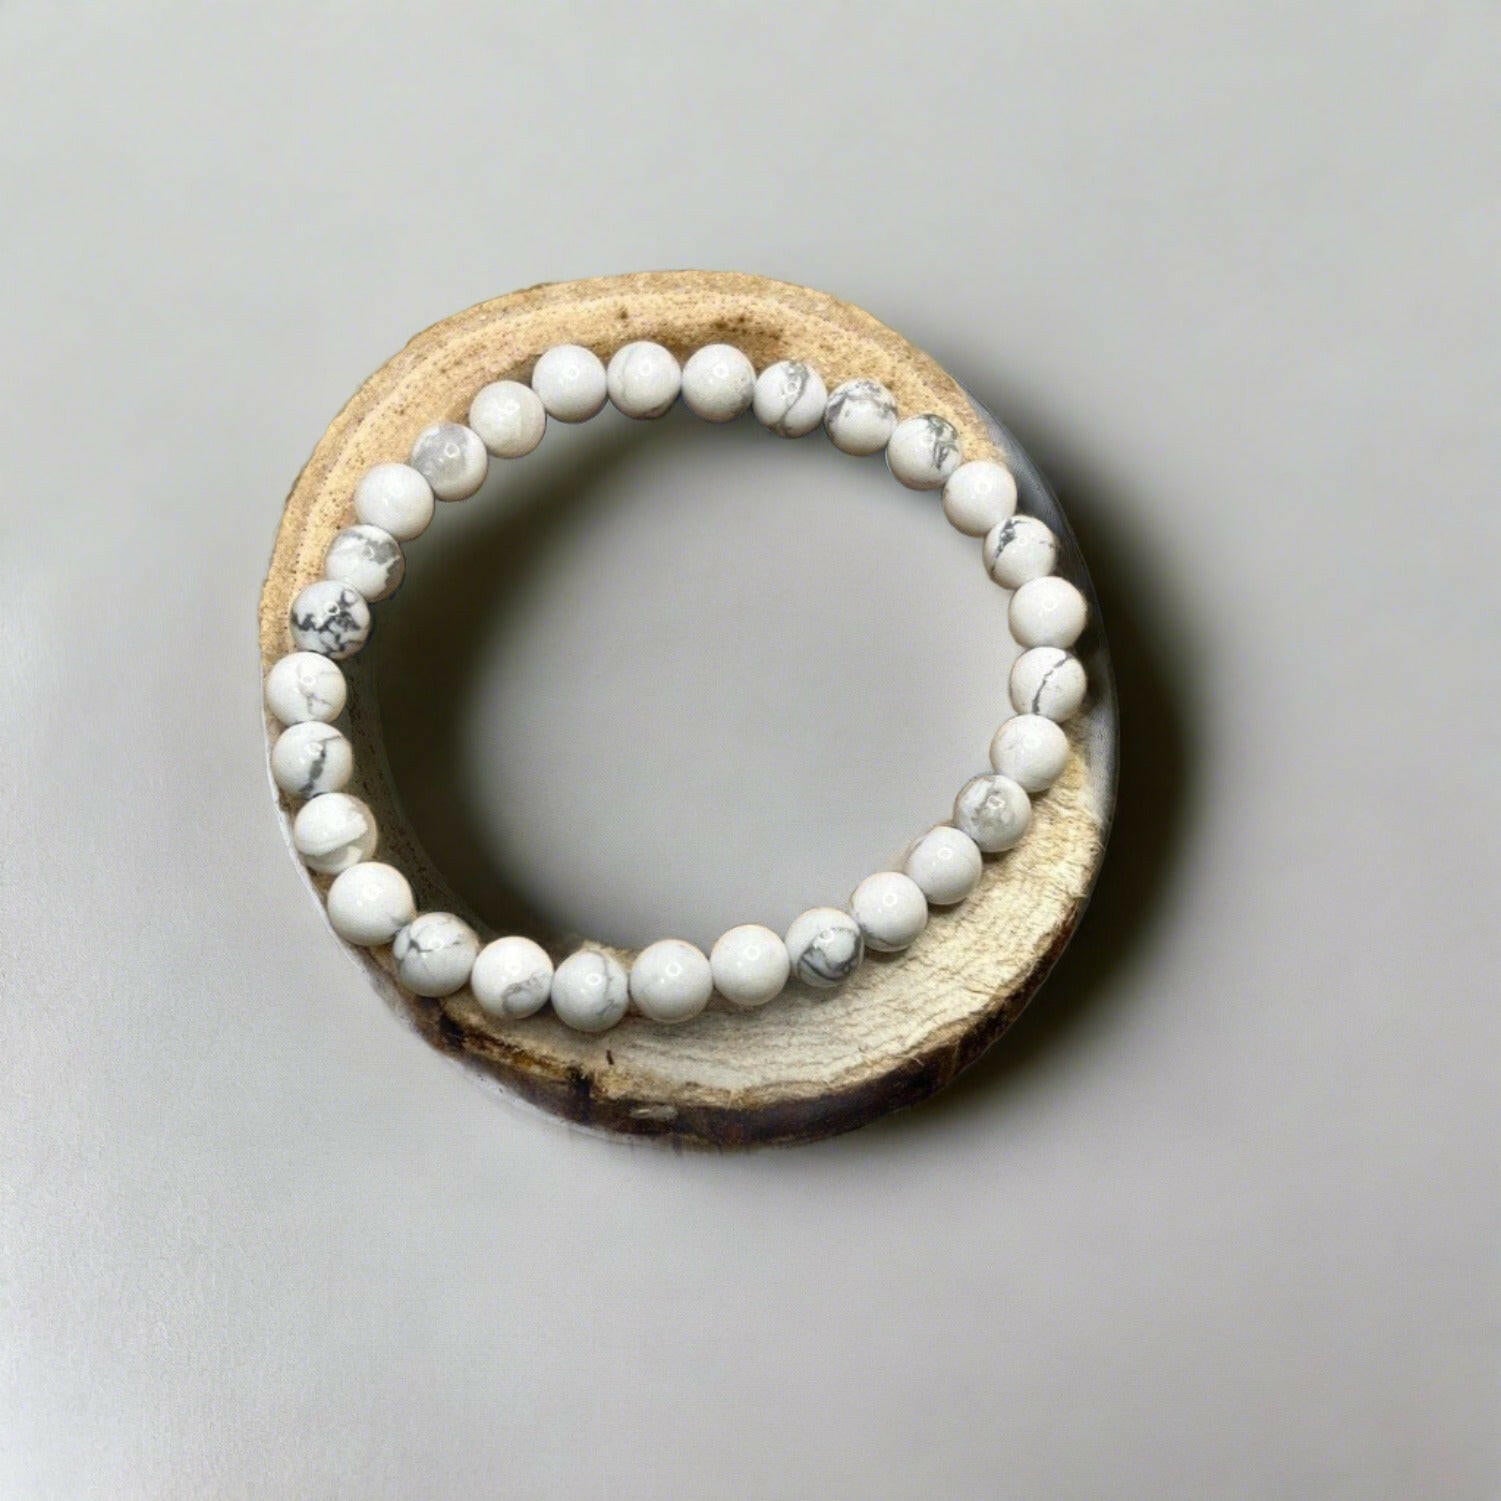 Bec Sue Jewelry Shop bracelet 6.5 / white / white howlite Grade AAA White Howlite Bead Bracelet Tags 491